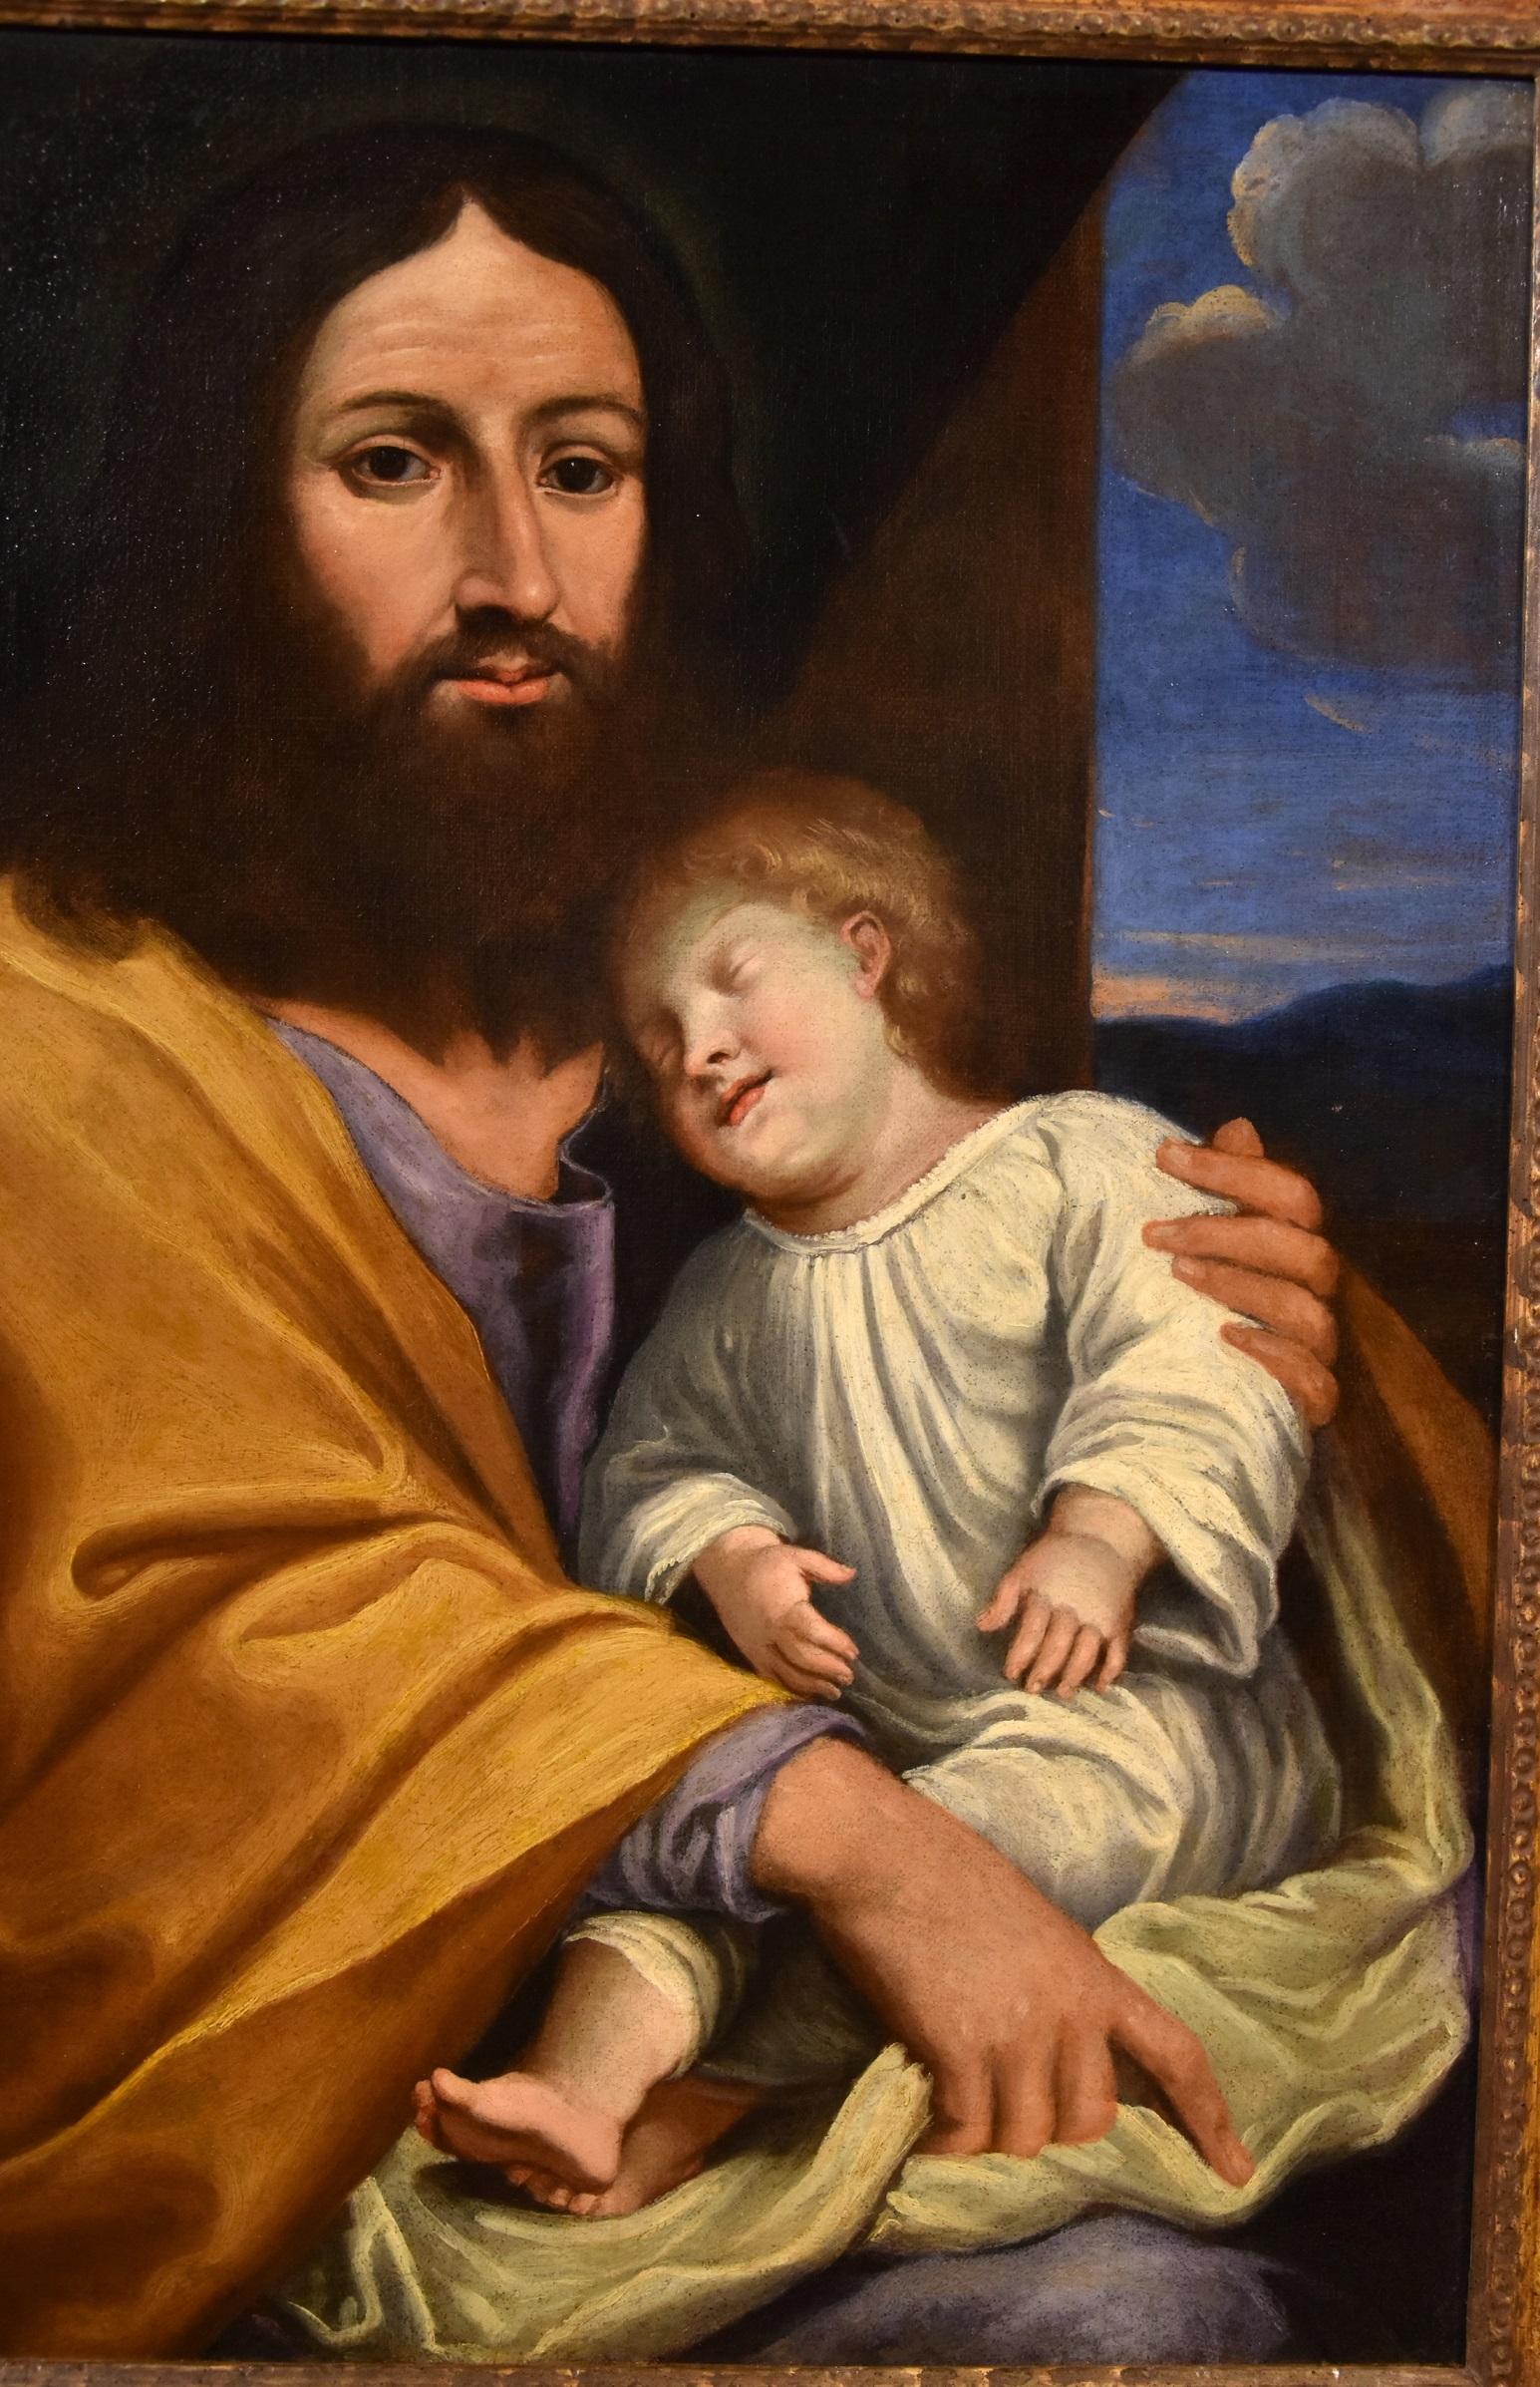 Jesus Sohn Salvi, Gemälde Öl auf Leinwand, alter Meister, 17. Jahrhundert, Italienisch, religiös (Braun), Portrait Painting, von Giovan Battista Salvi known as 